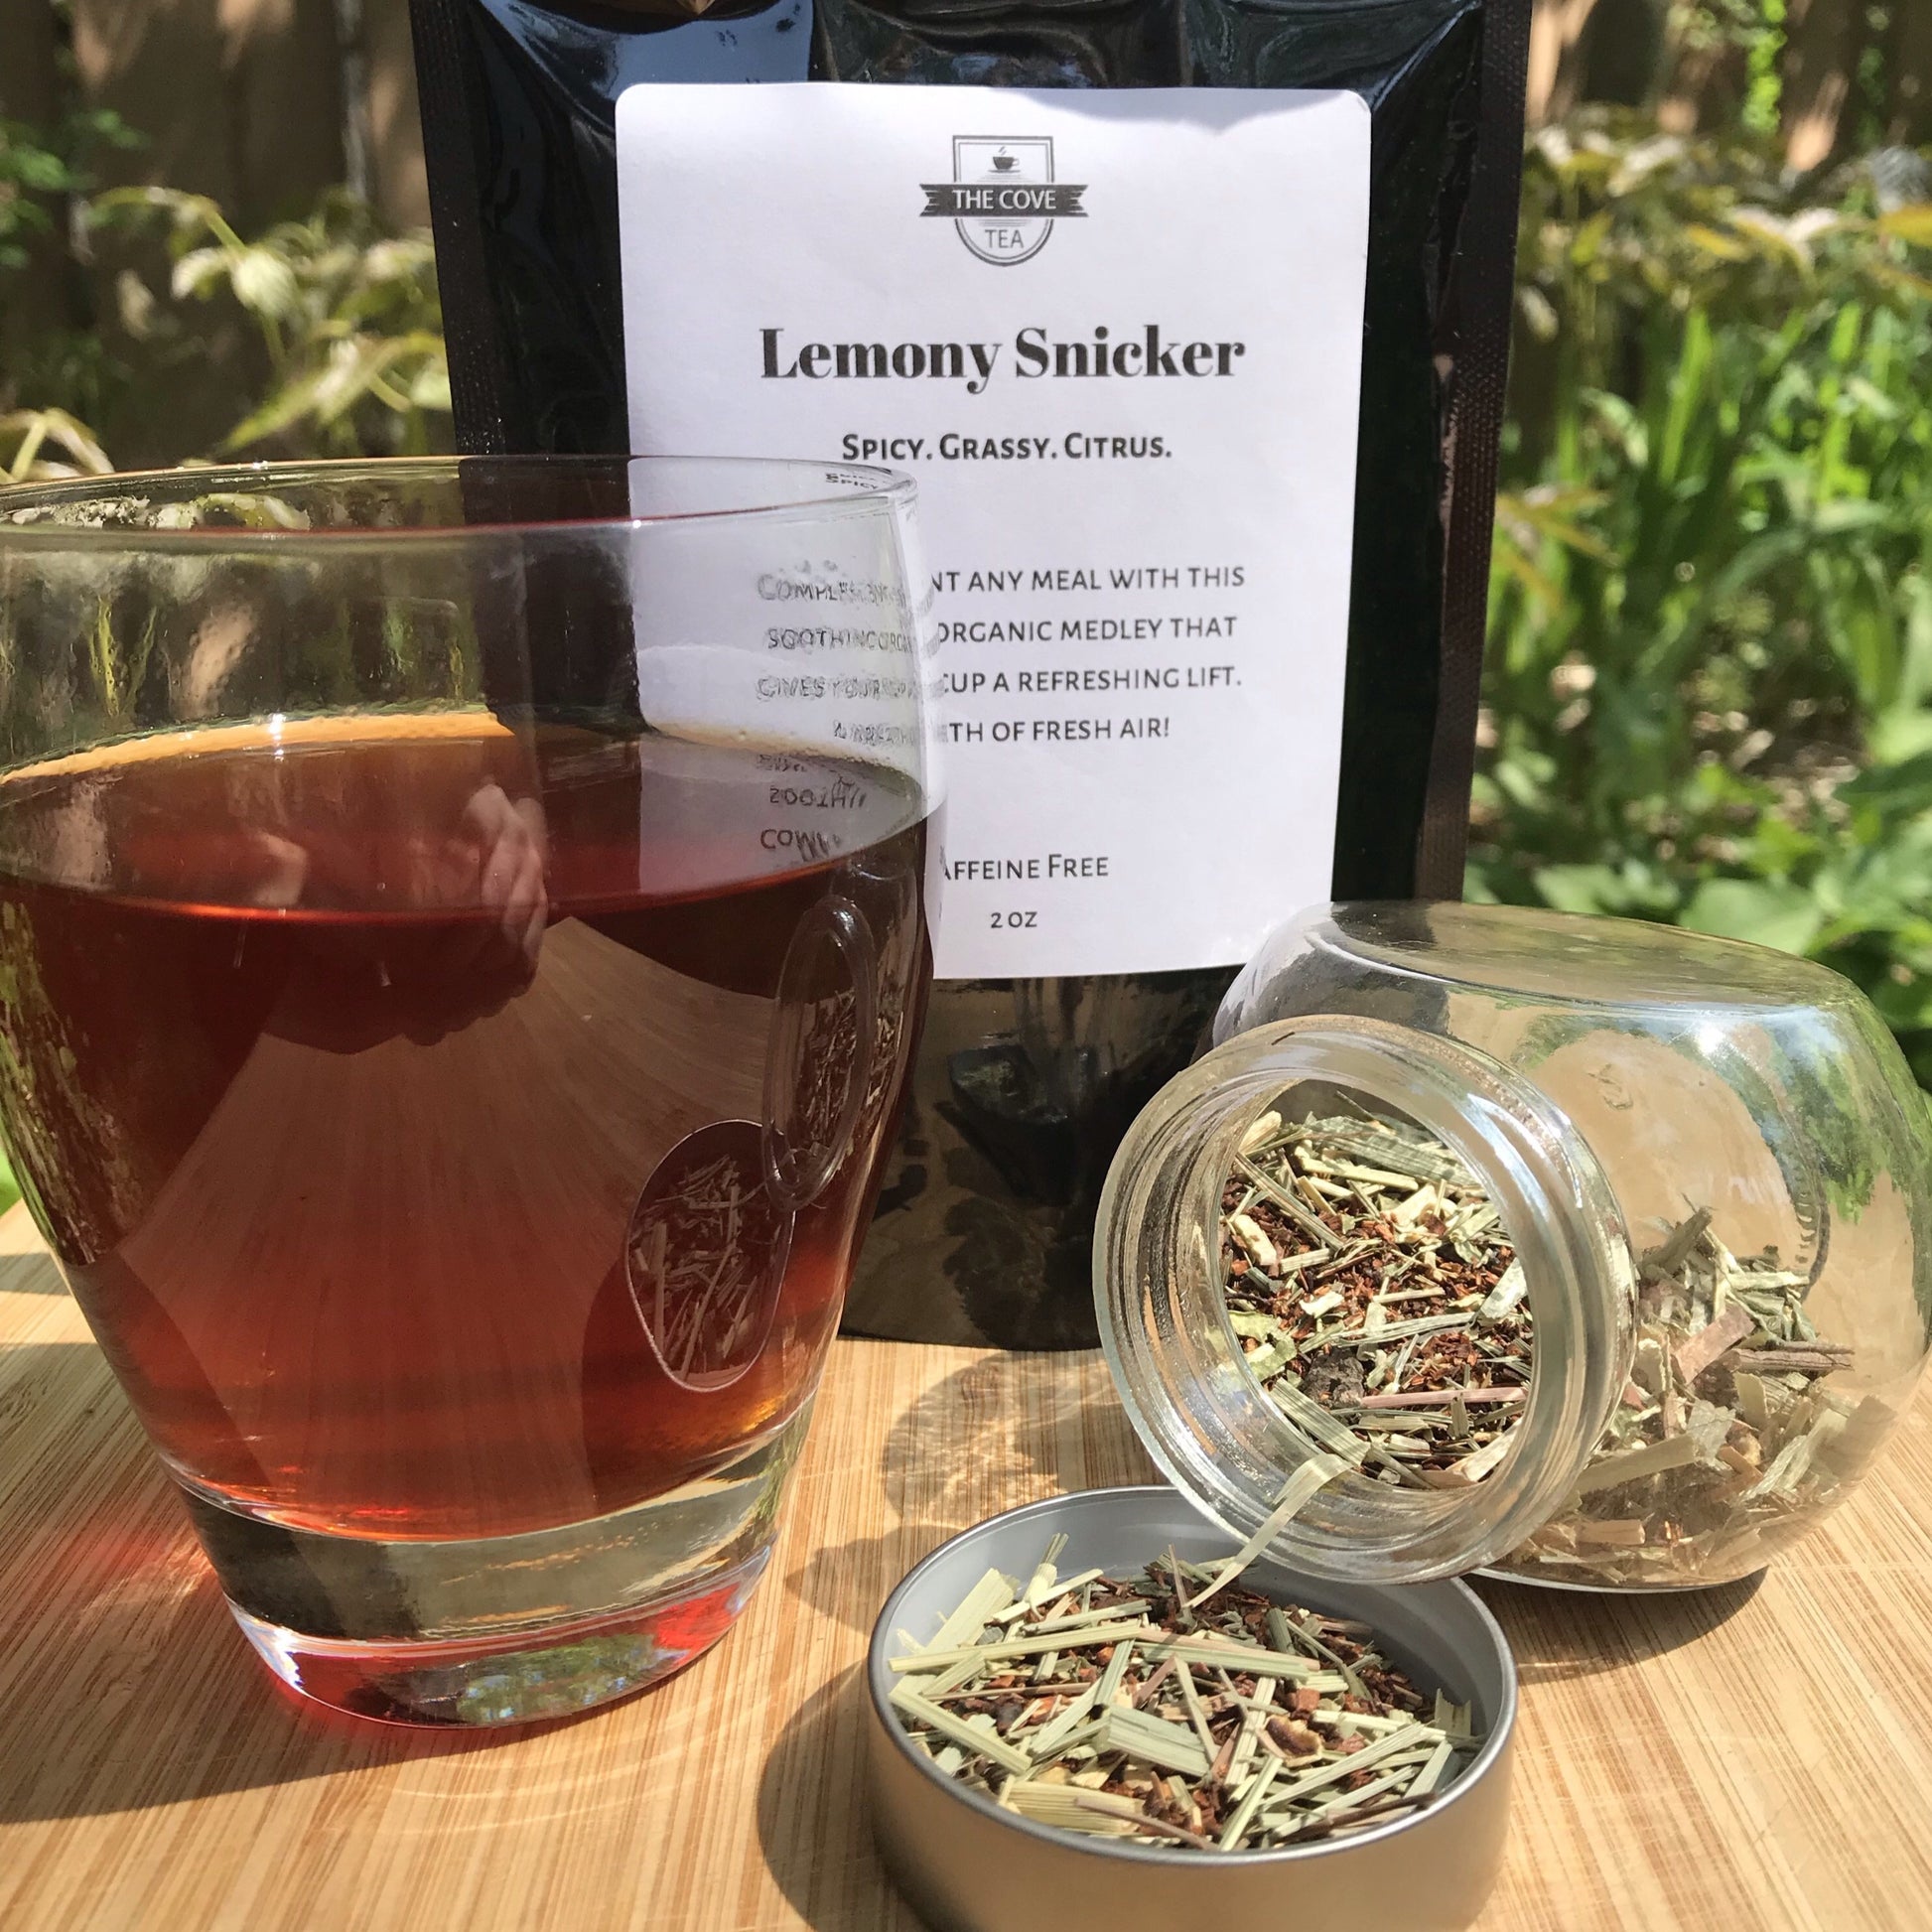 Lemony Snicker Liquor Colour and Loose Leaf Tea 2 oz Pouch - The Cove Tea Company - Spruce Grove Alberta Canada